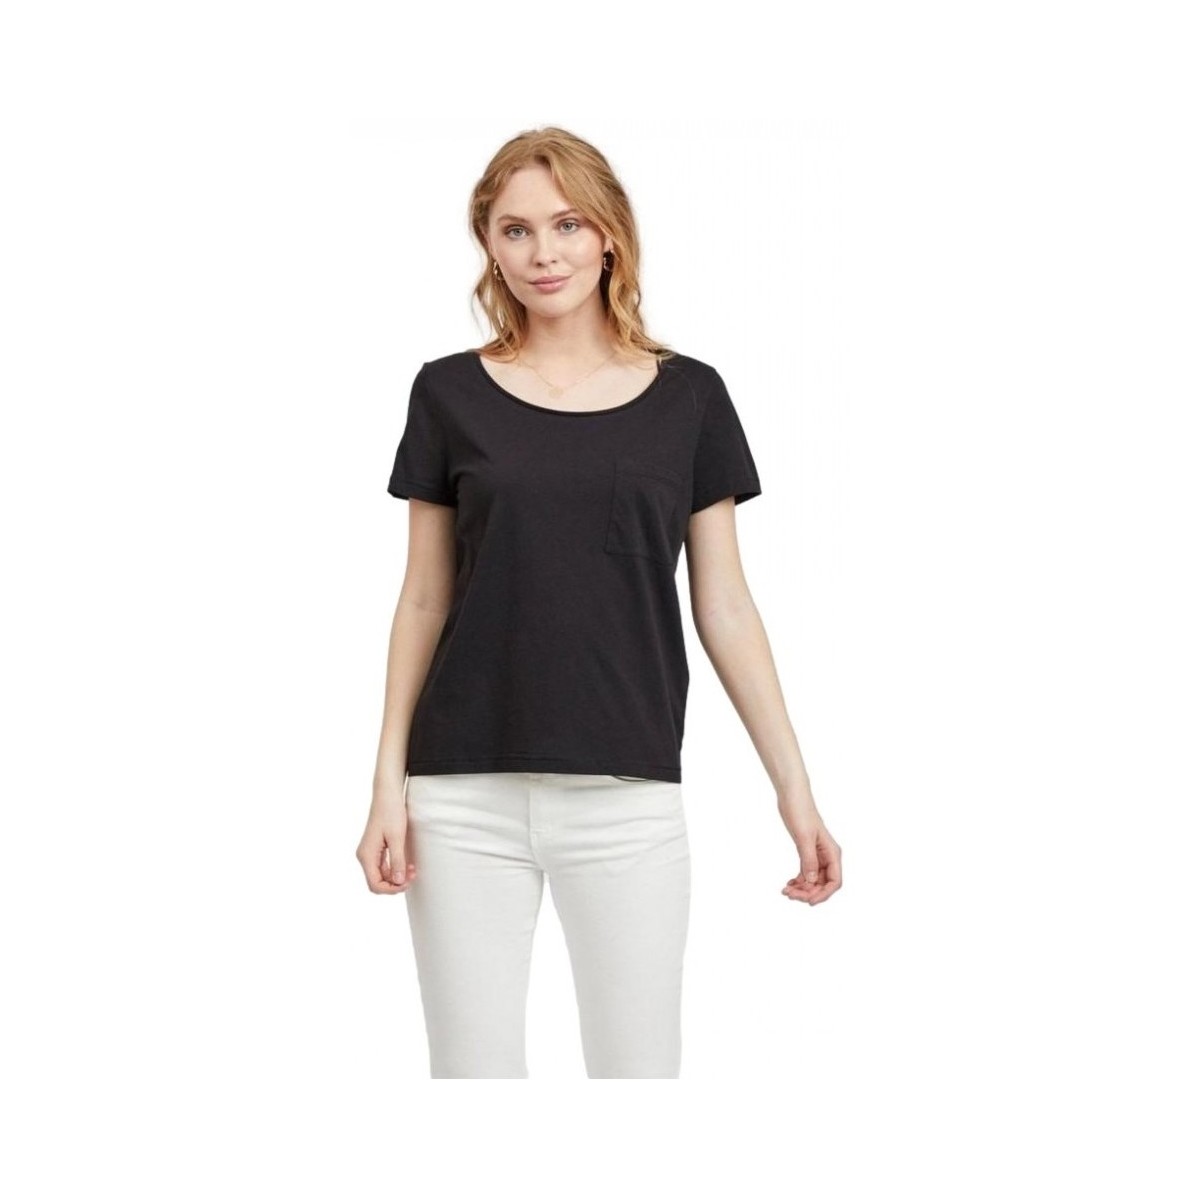 Textiel Dames Sweaters / Sweatshirts Vila Susette T-Shirt - Black Zwart